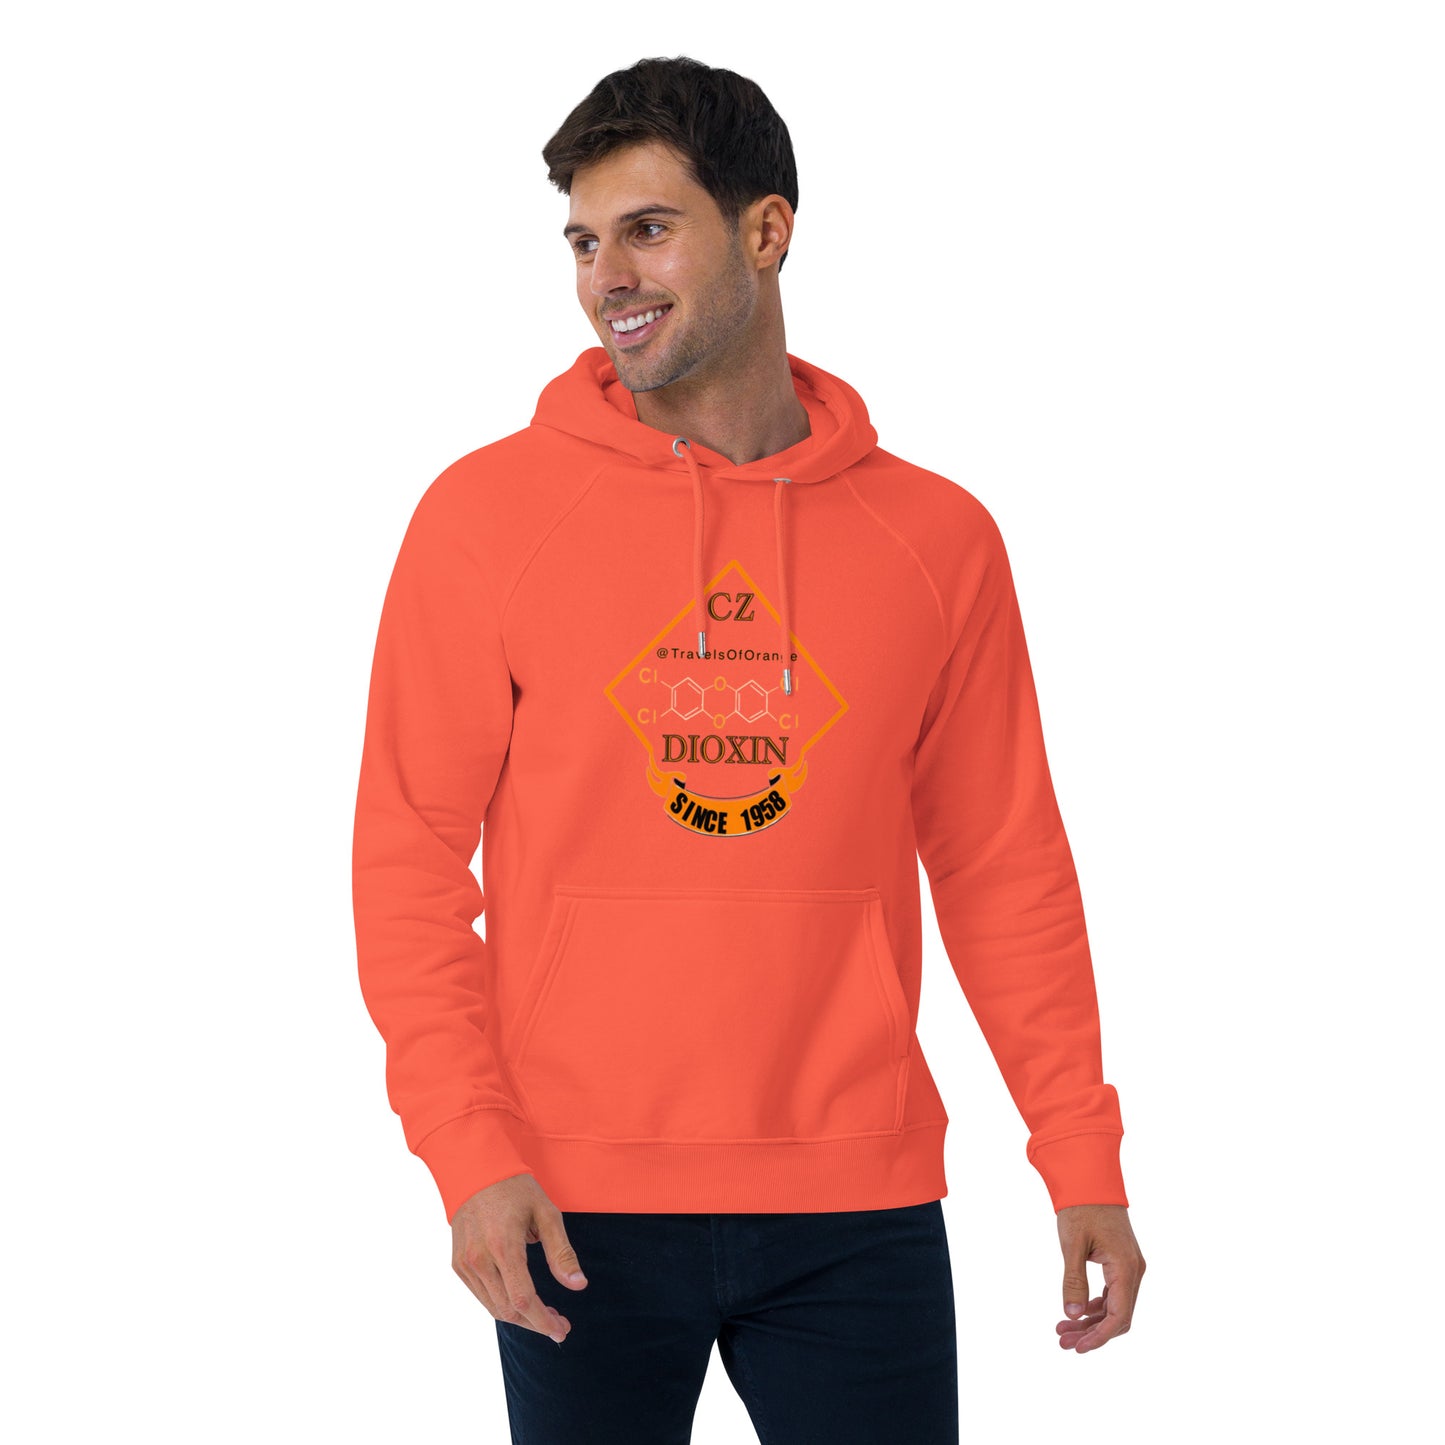 Panama Canal Zone Veteran - Unisex eco raglan hoodie - price includes shipping